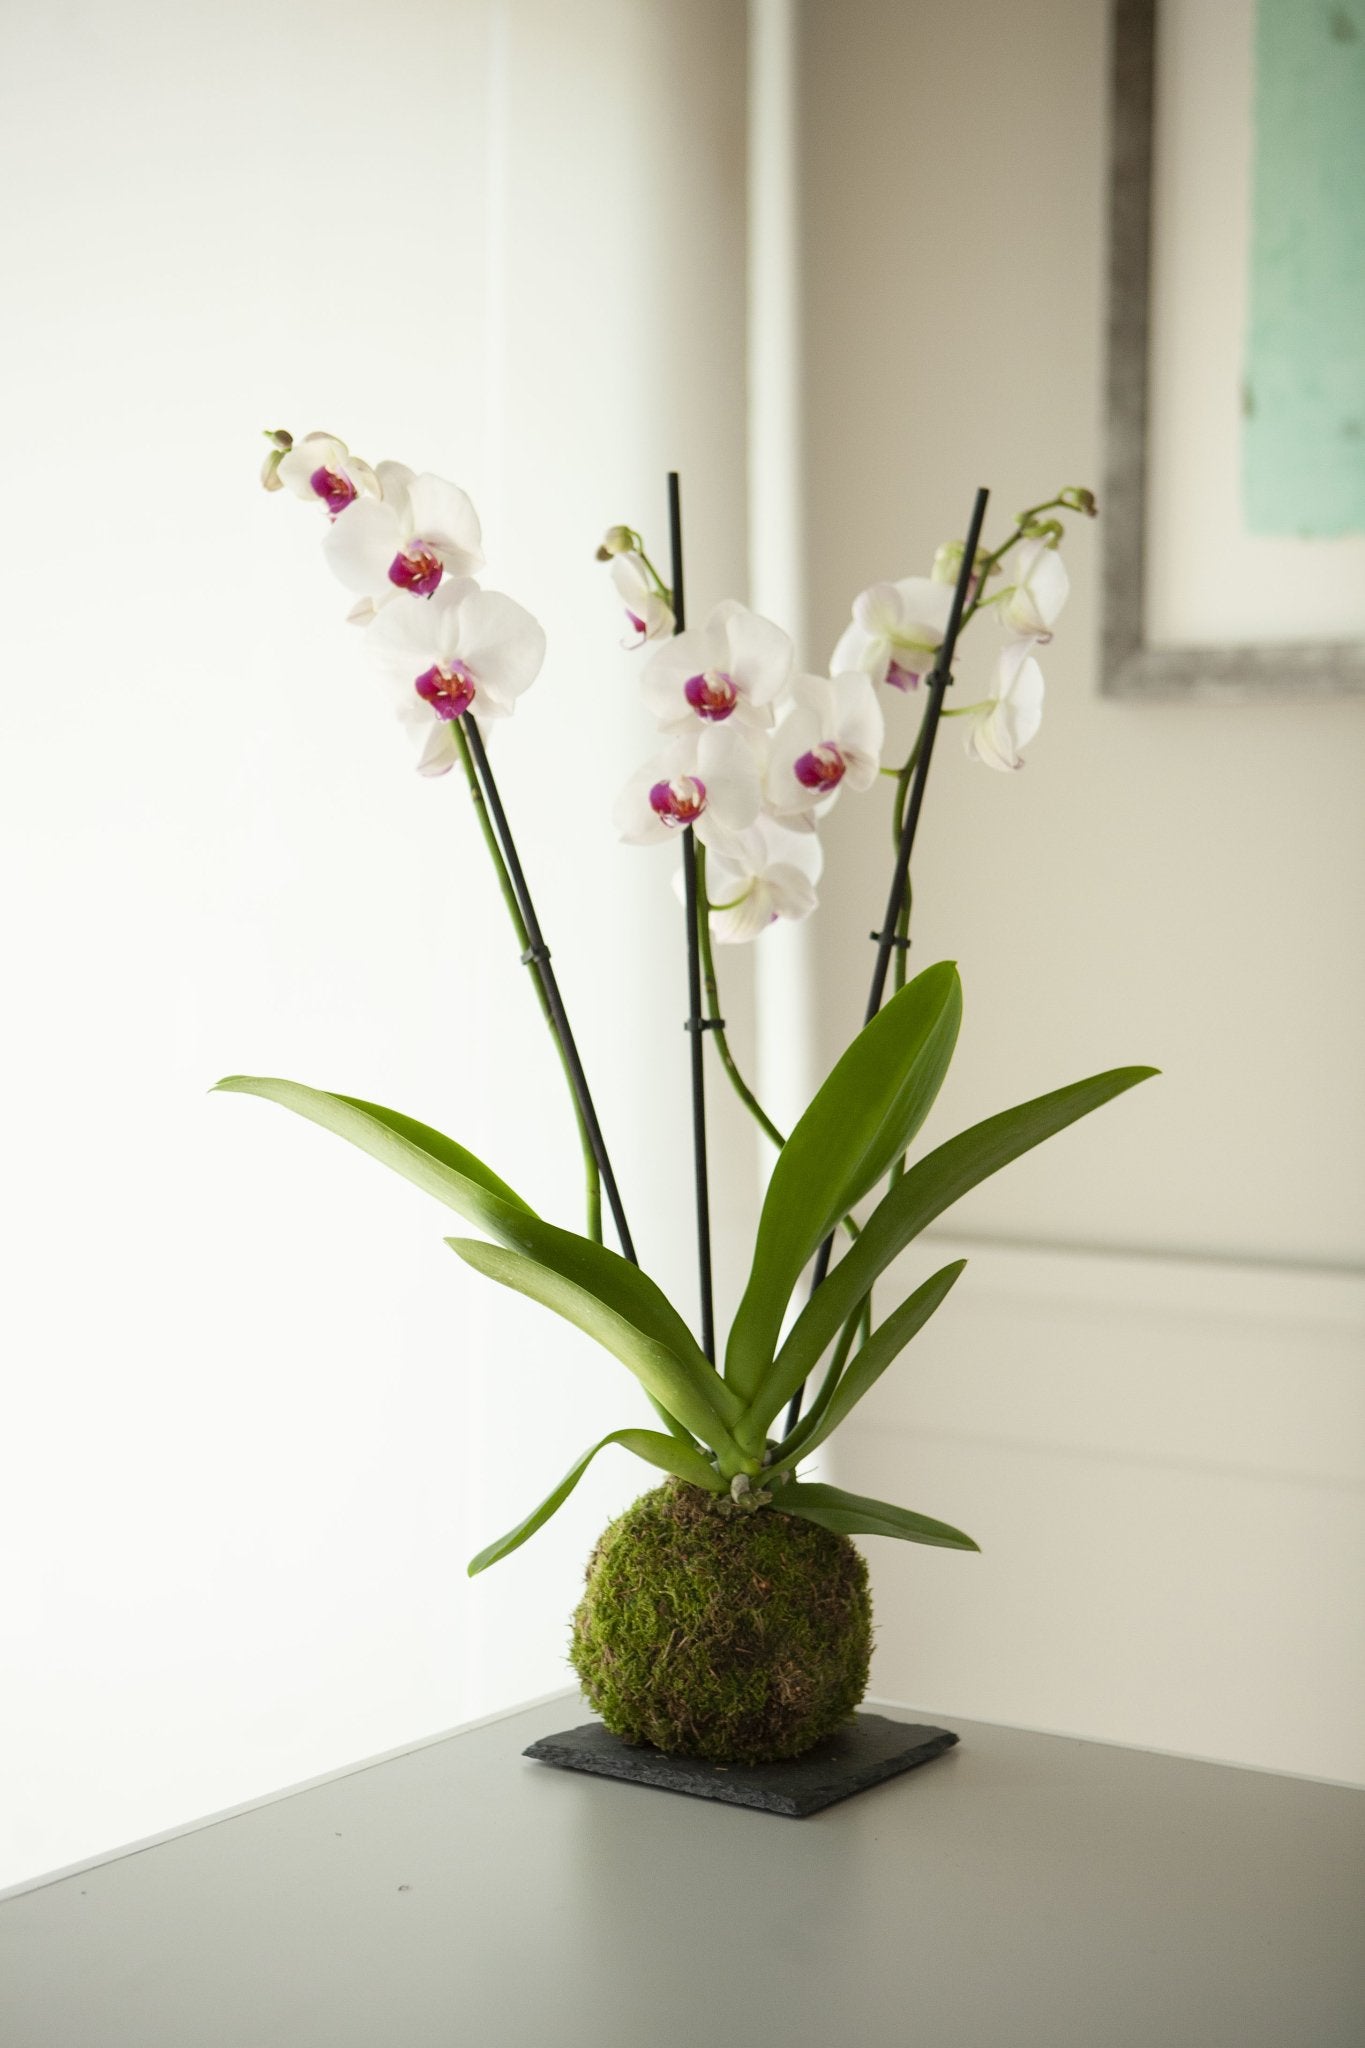 Orquídea Blanca Kokedama - Omotesando Plants